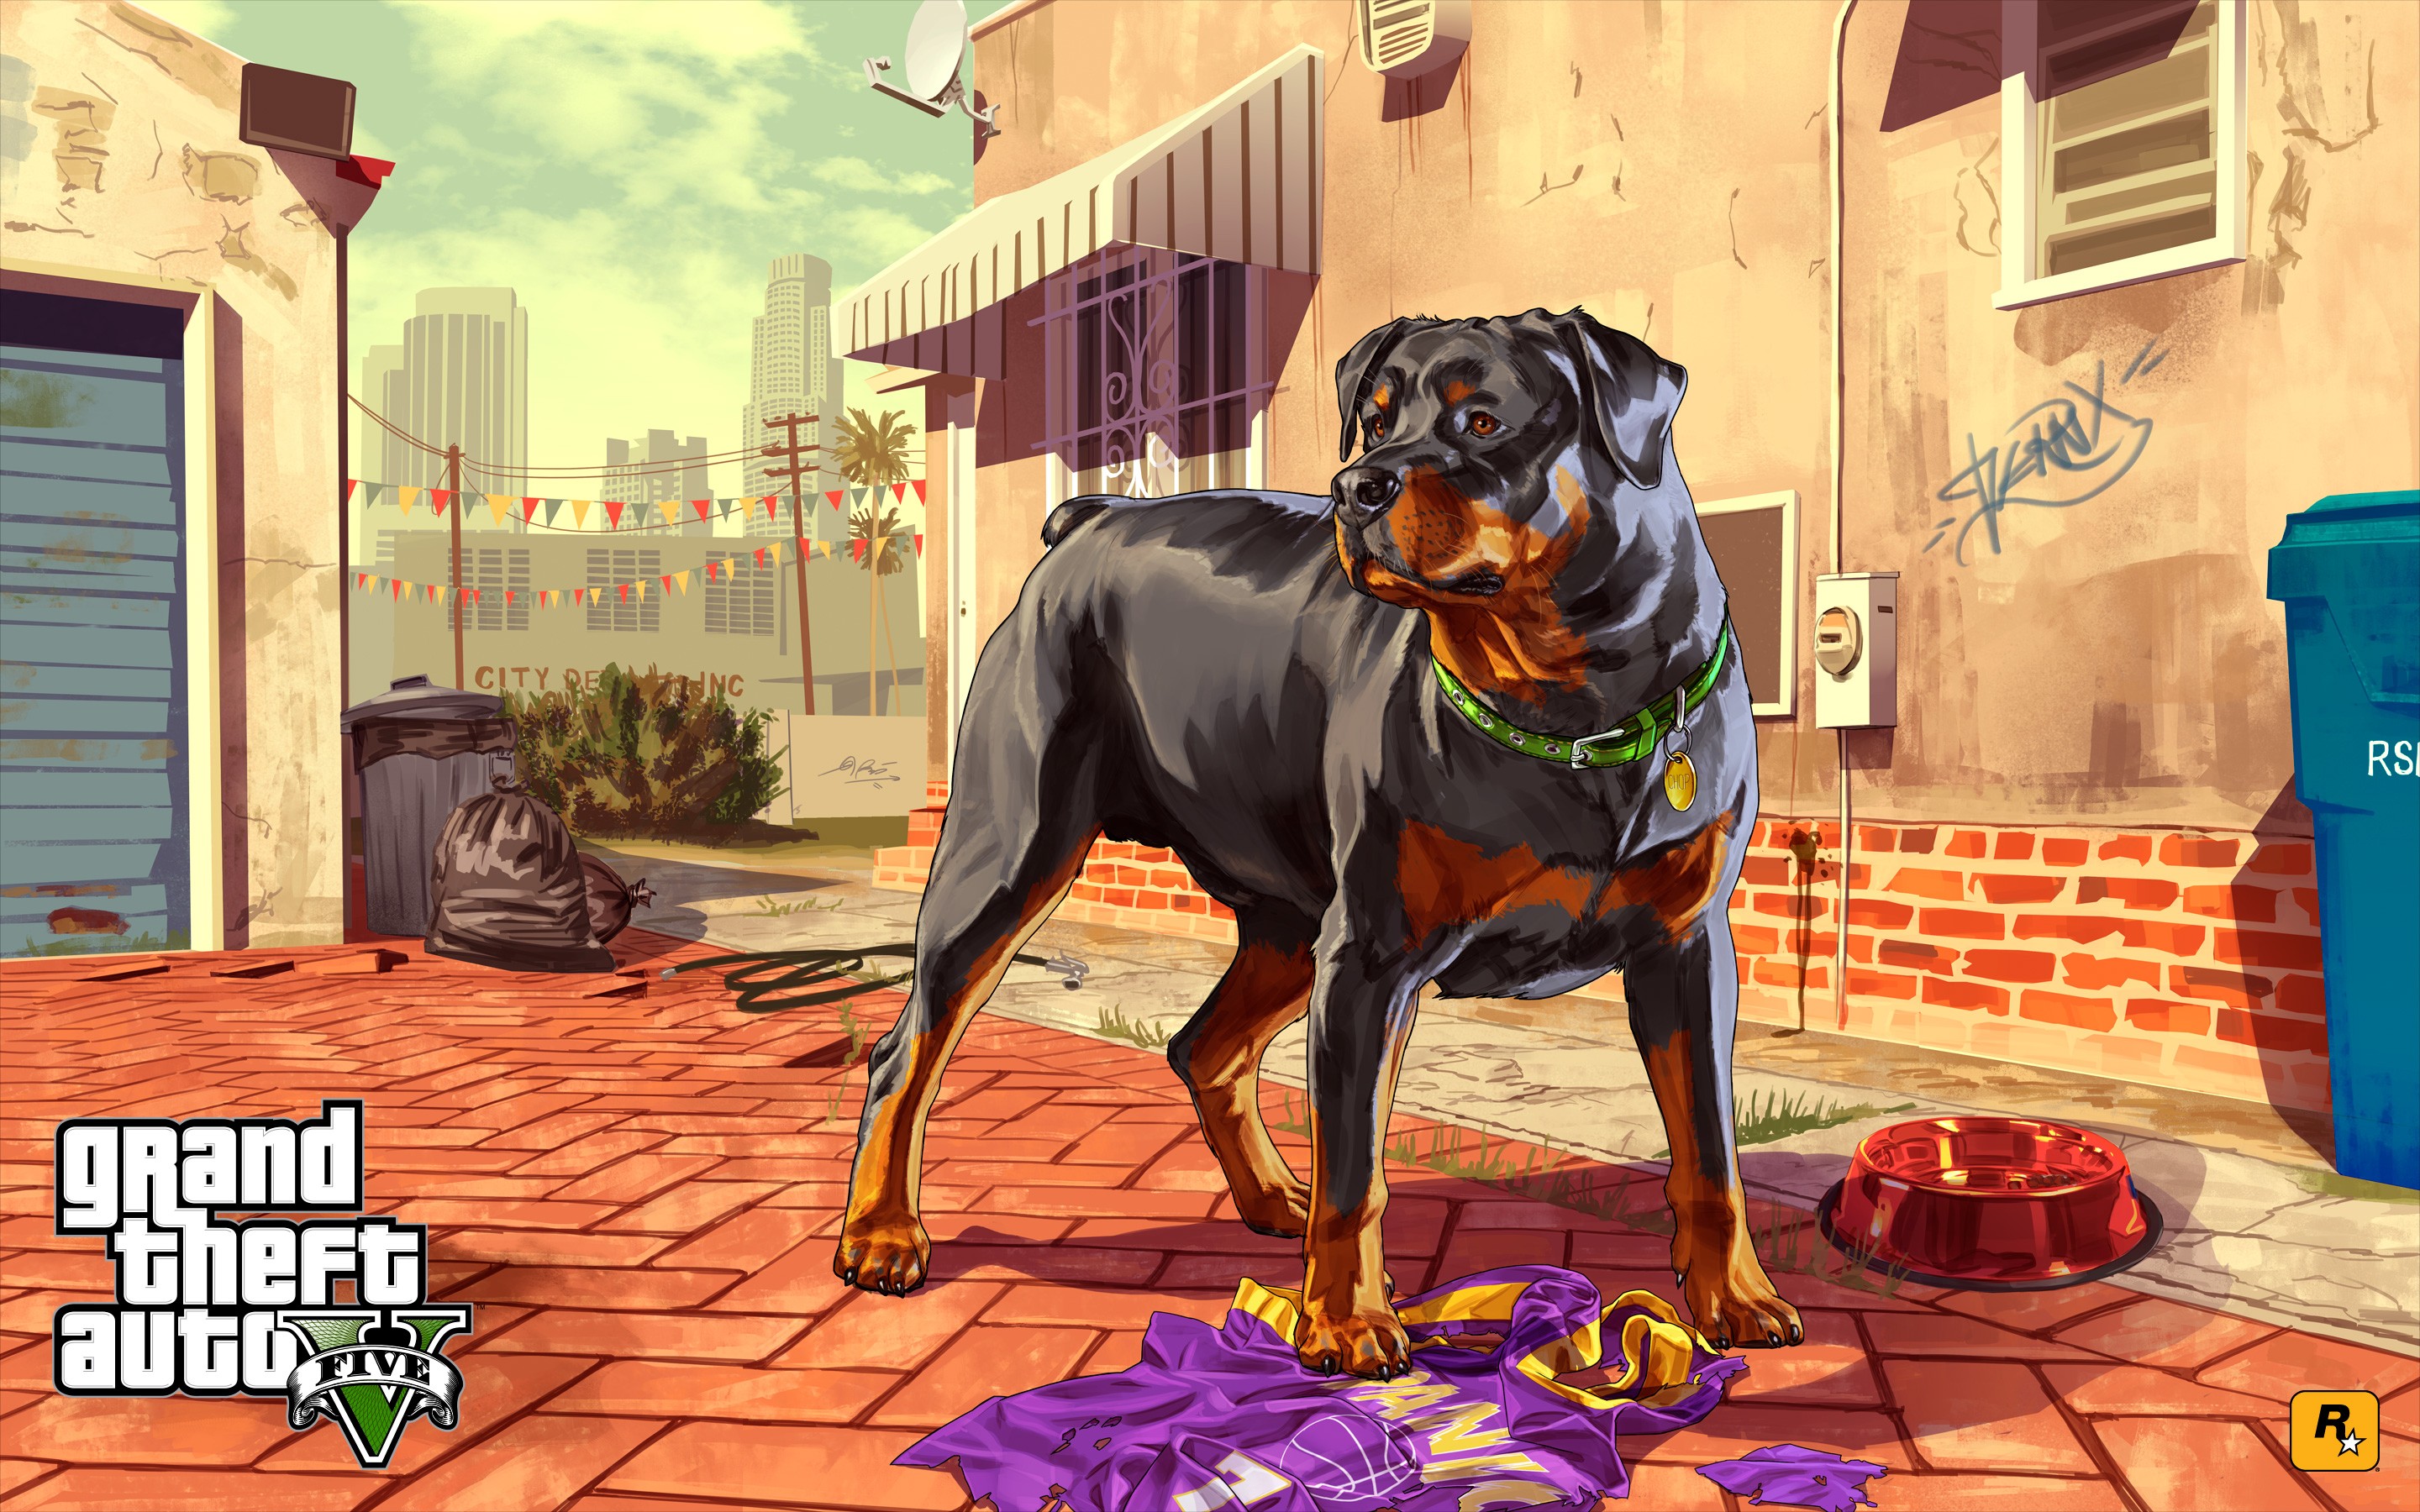 General 2880x1800 dog video games PC gaming Rockstar Games animals mammals Grand Theft Auto V video game art